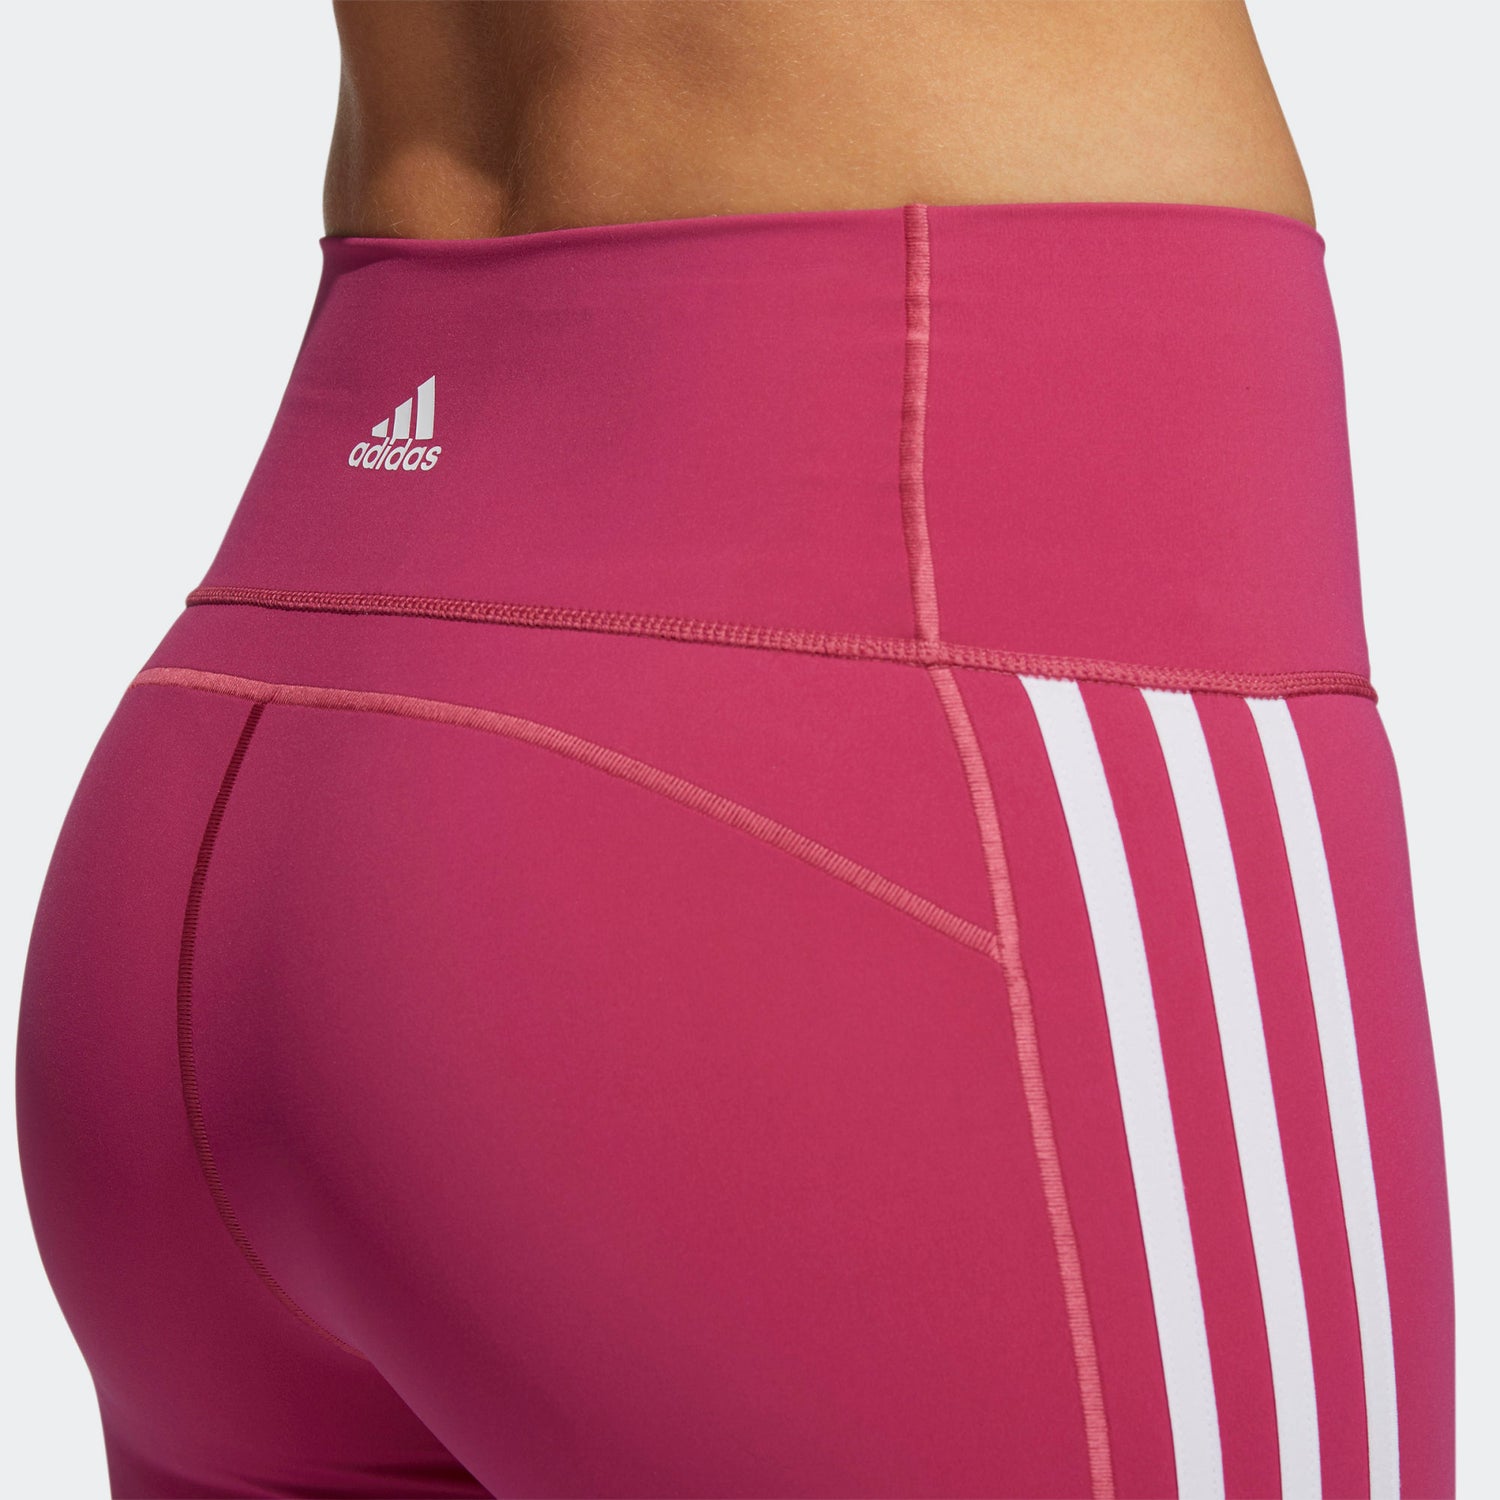 Adidas / Women's Plus Size Believe This 2.0 3-Stripes 7/8 Tight